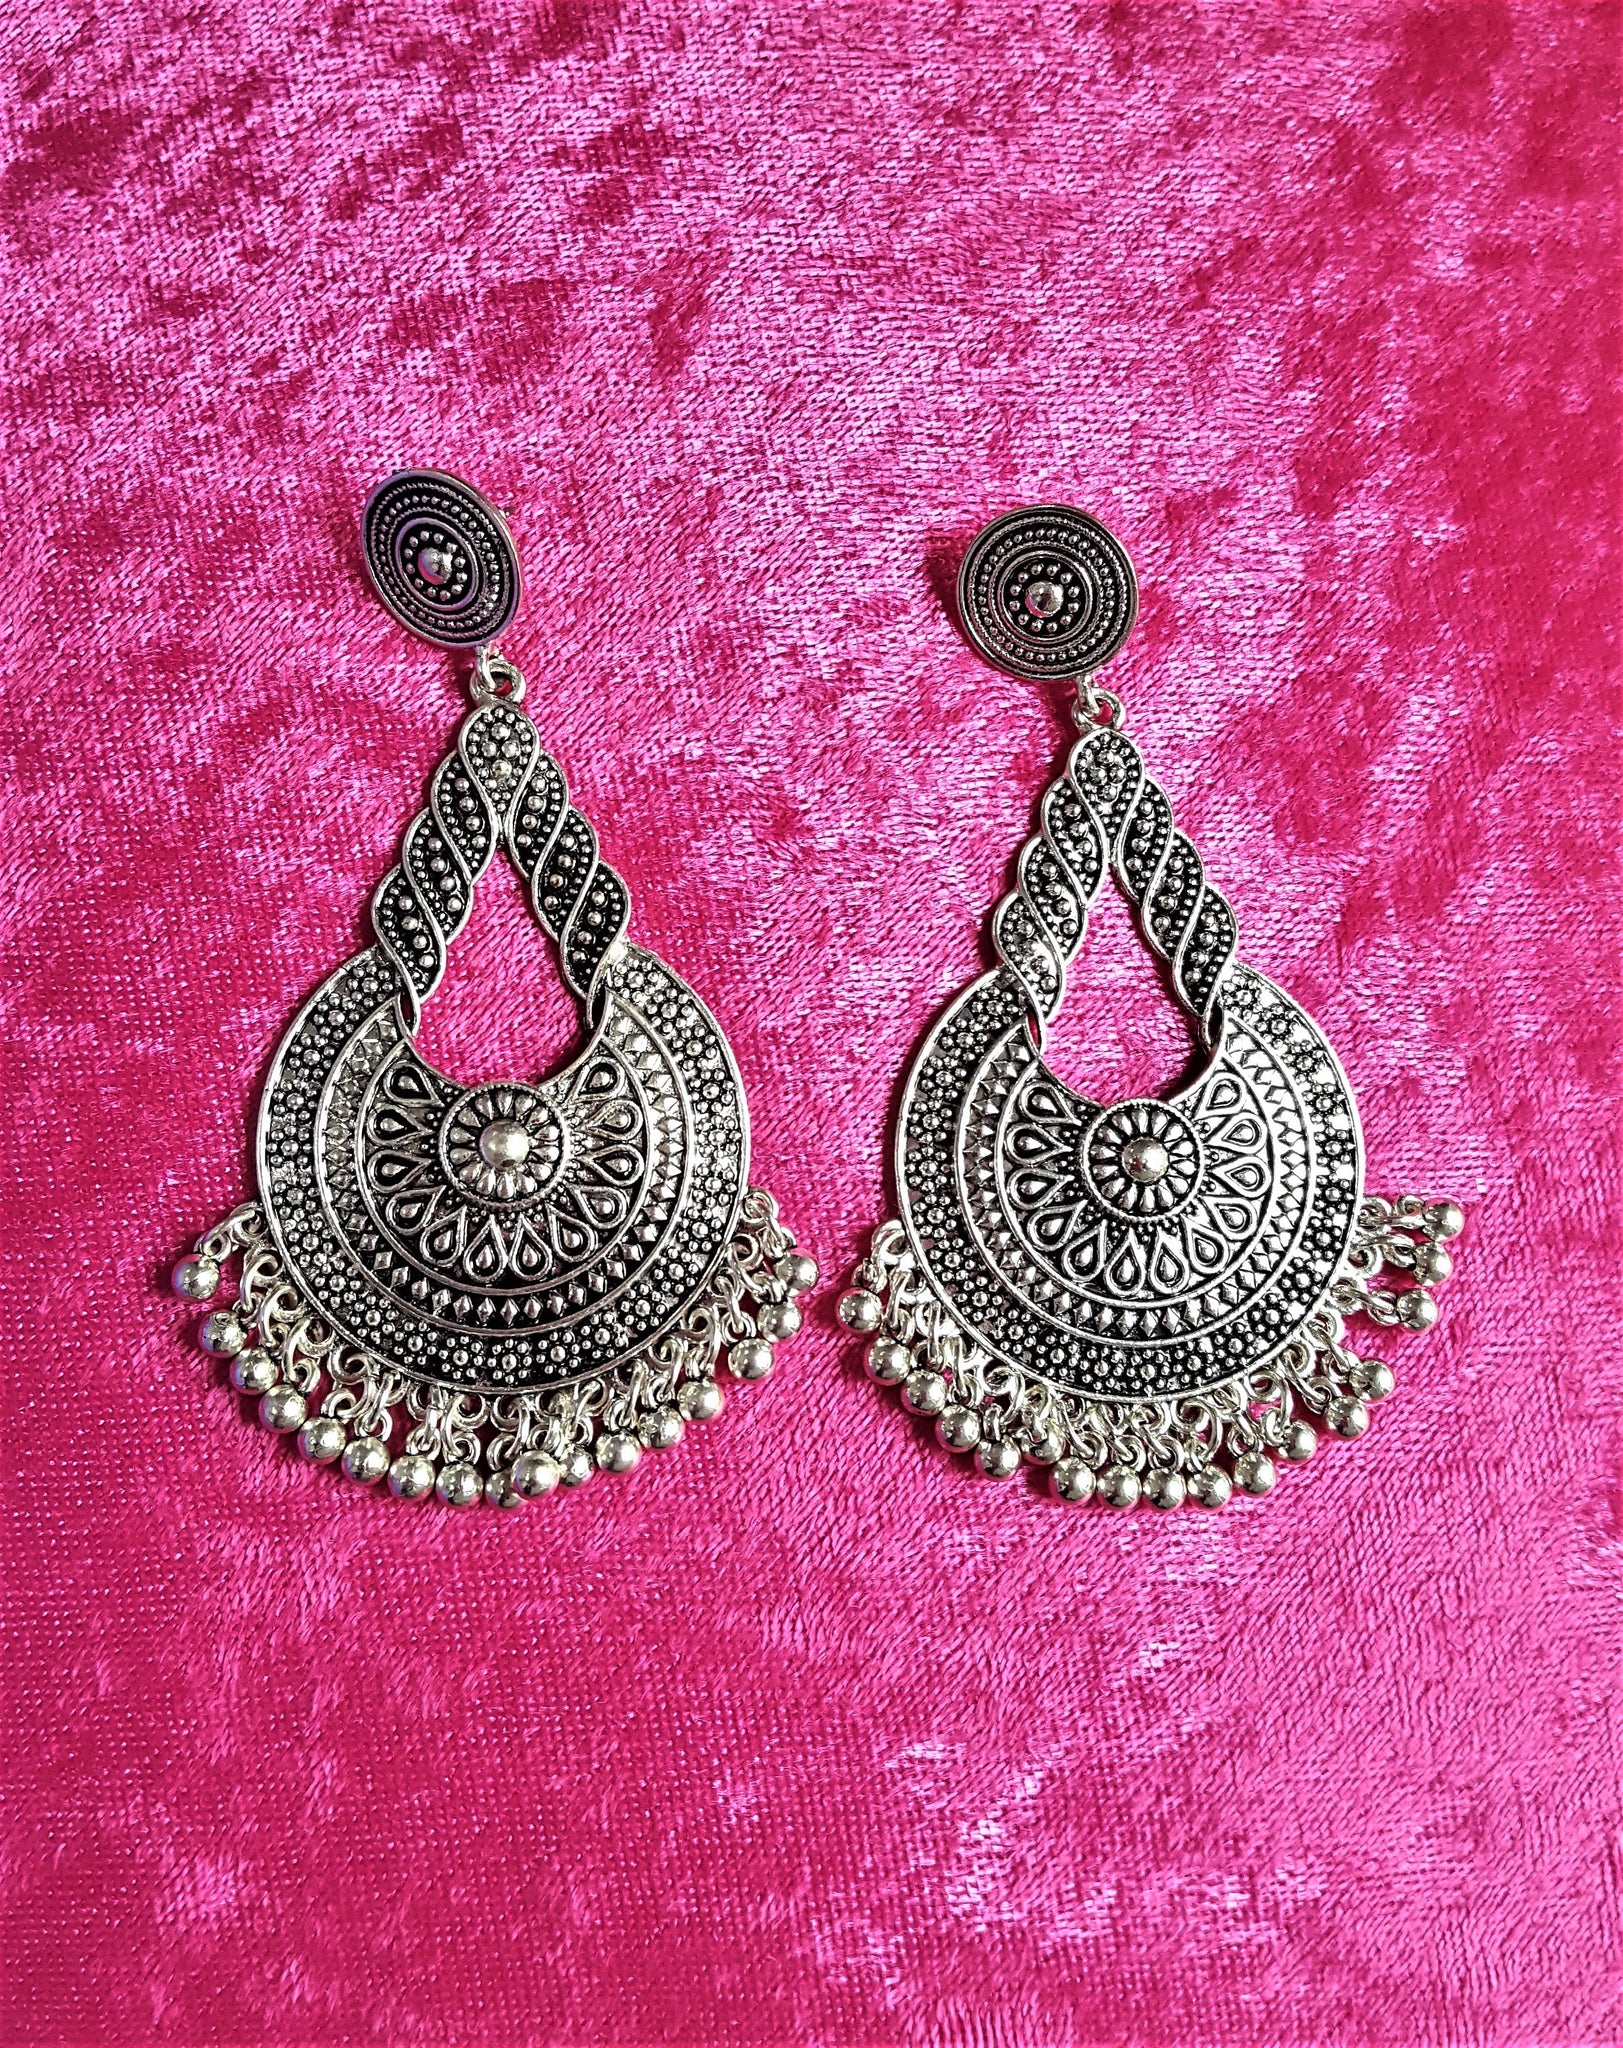 Oxidized Silver Large Jhumka Hook Earrings - 2 designs – Simpliful Jewelry